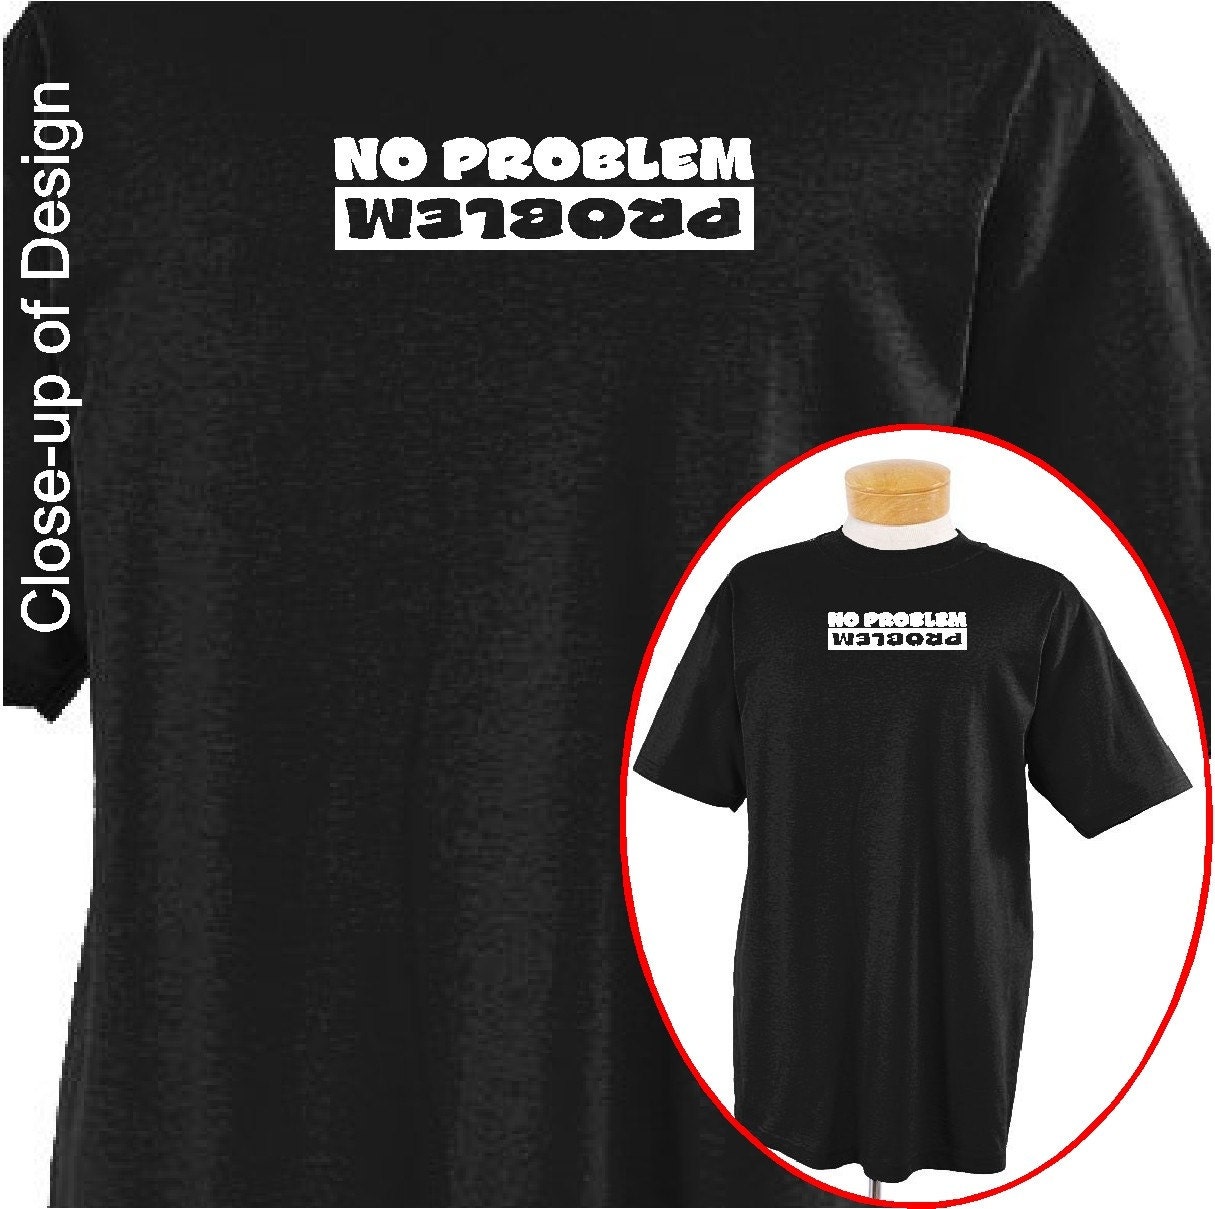 No problem...Funny T-shirt Humorous Shirt Funny Humor Tee